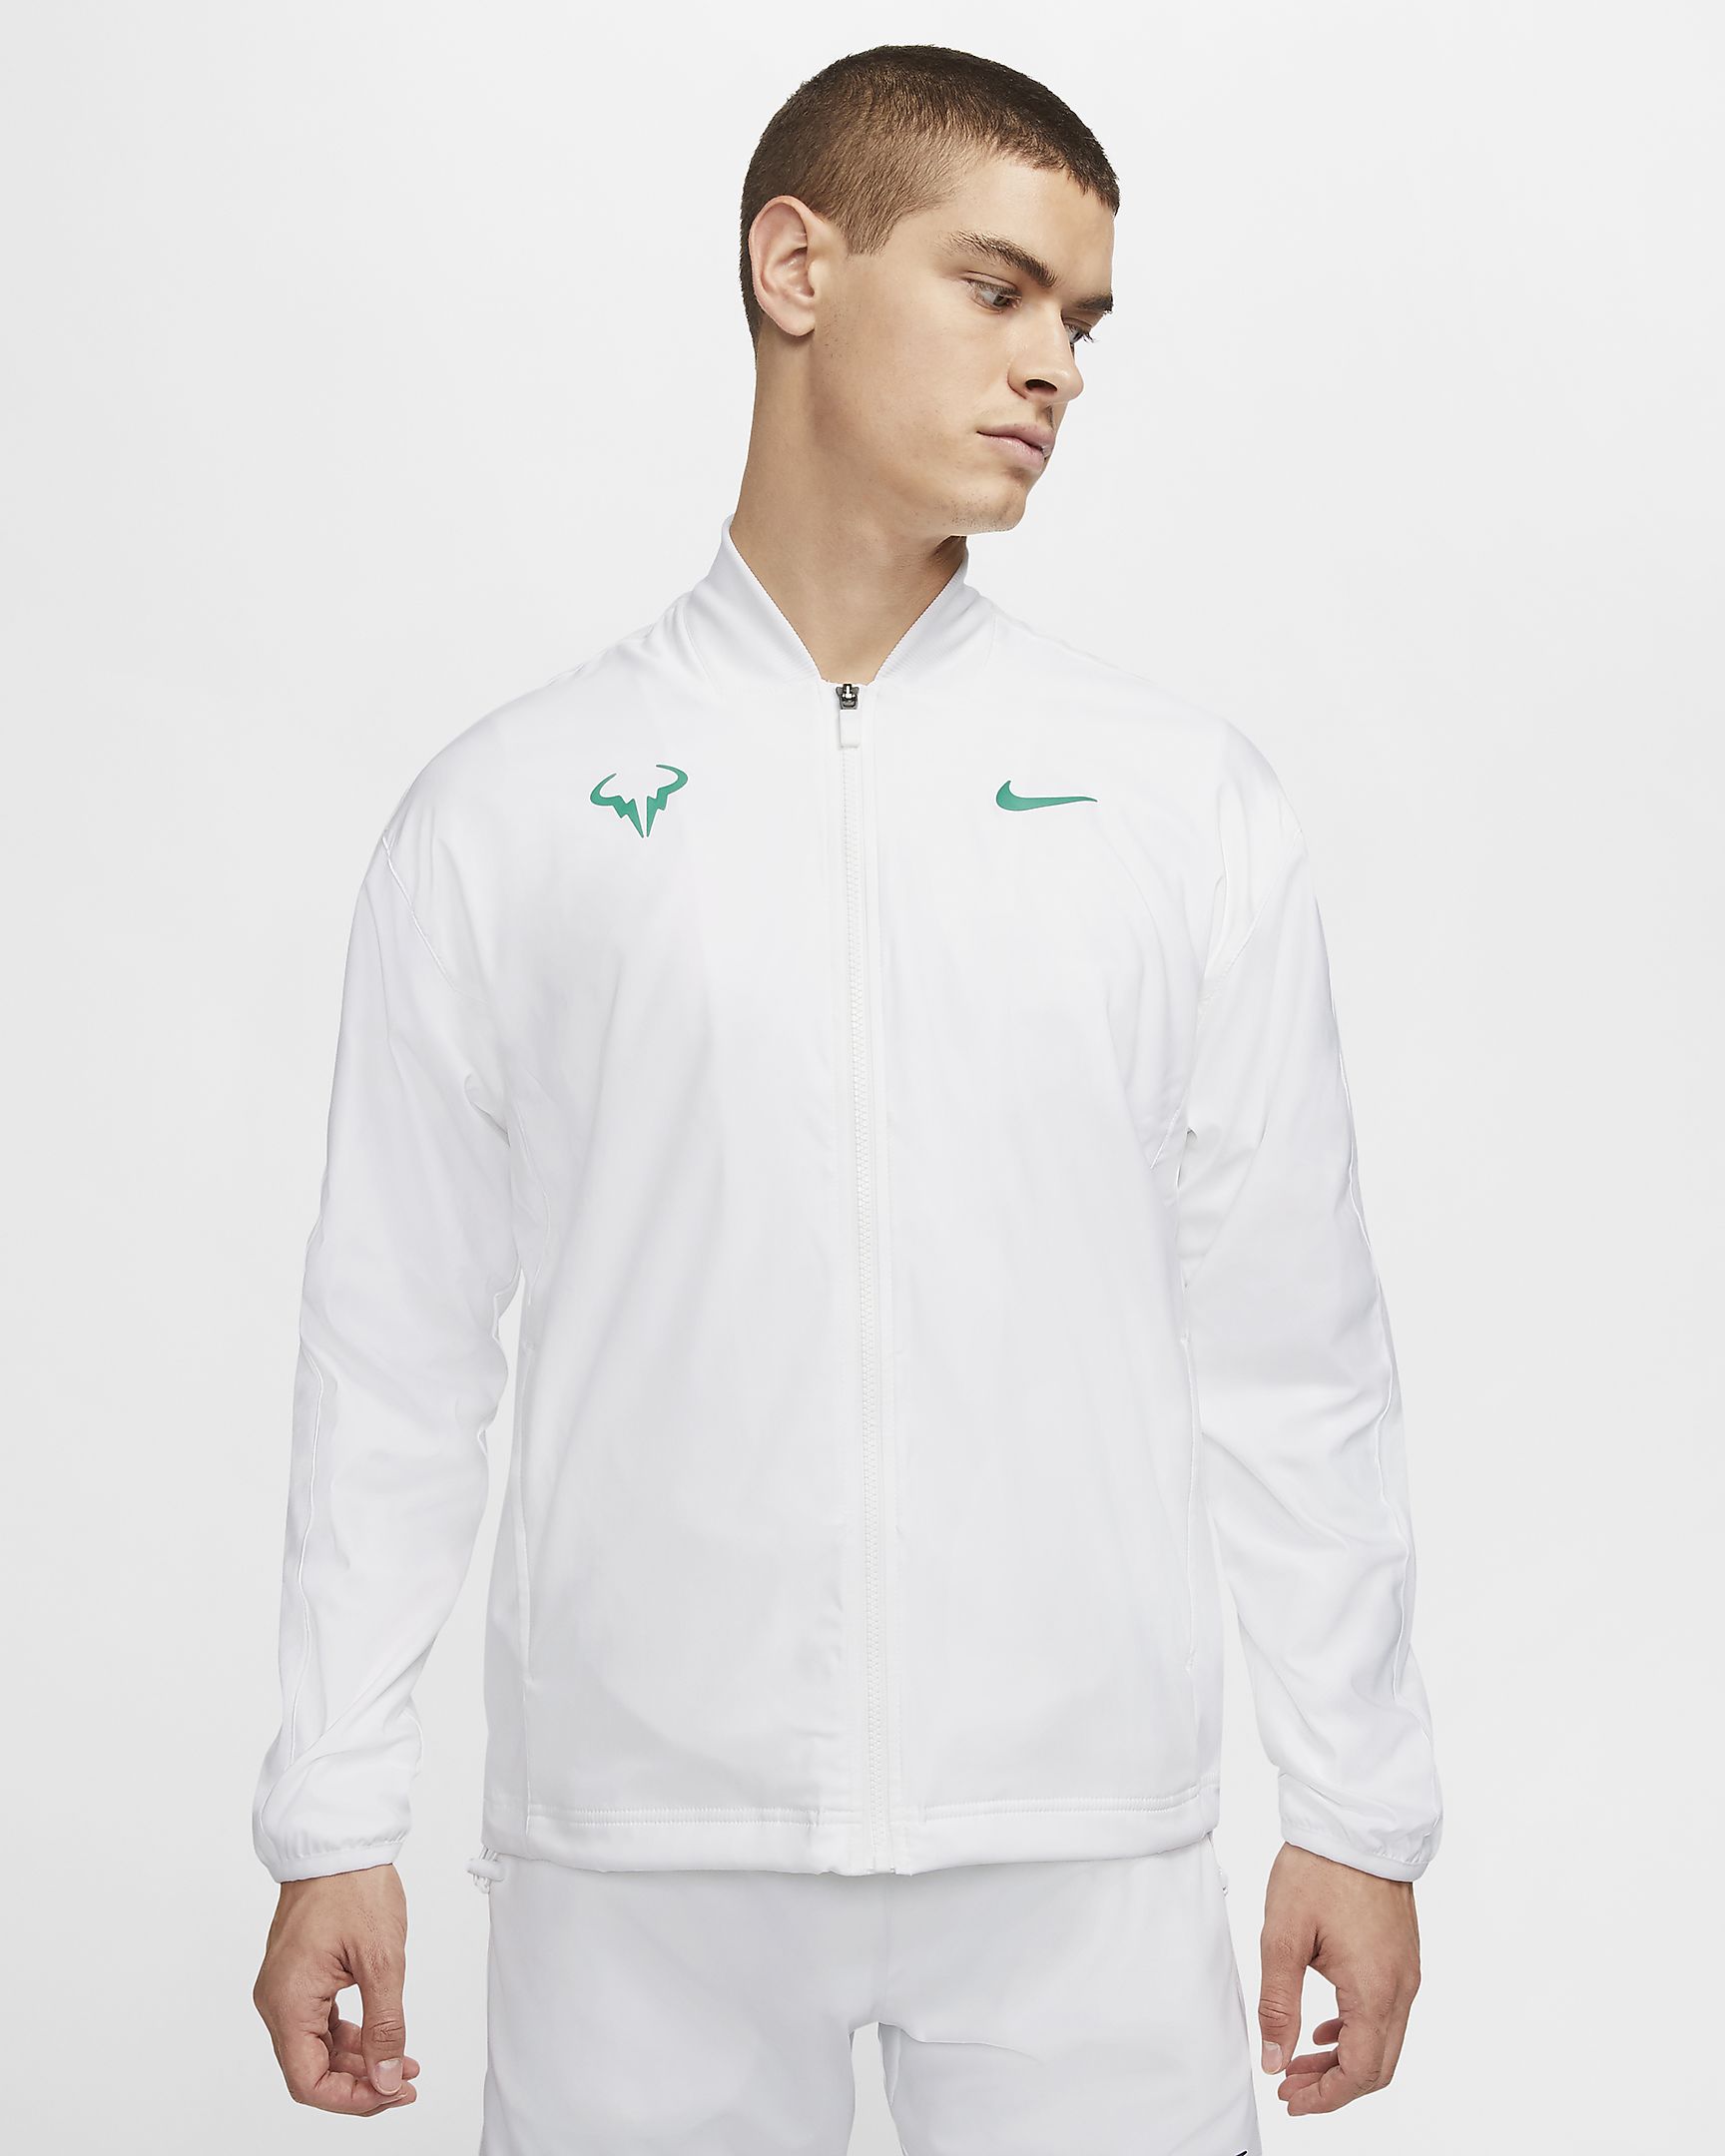 rafa-mens-tennis-jacket-hH31G1.jpg